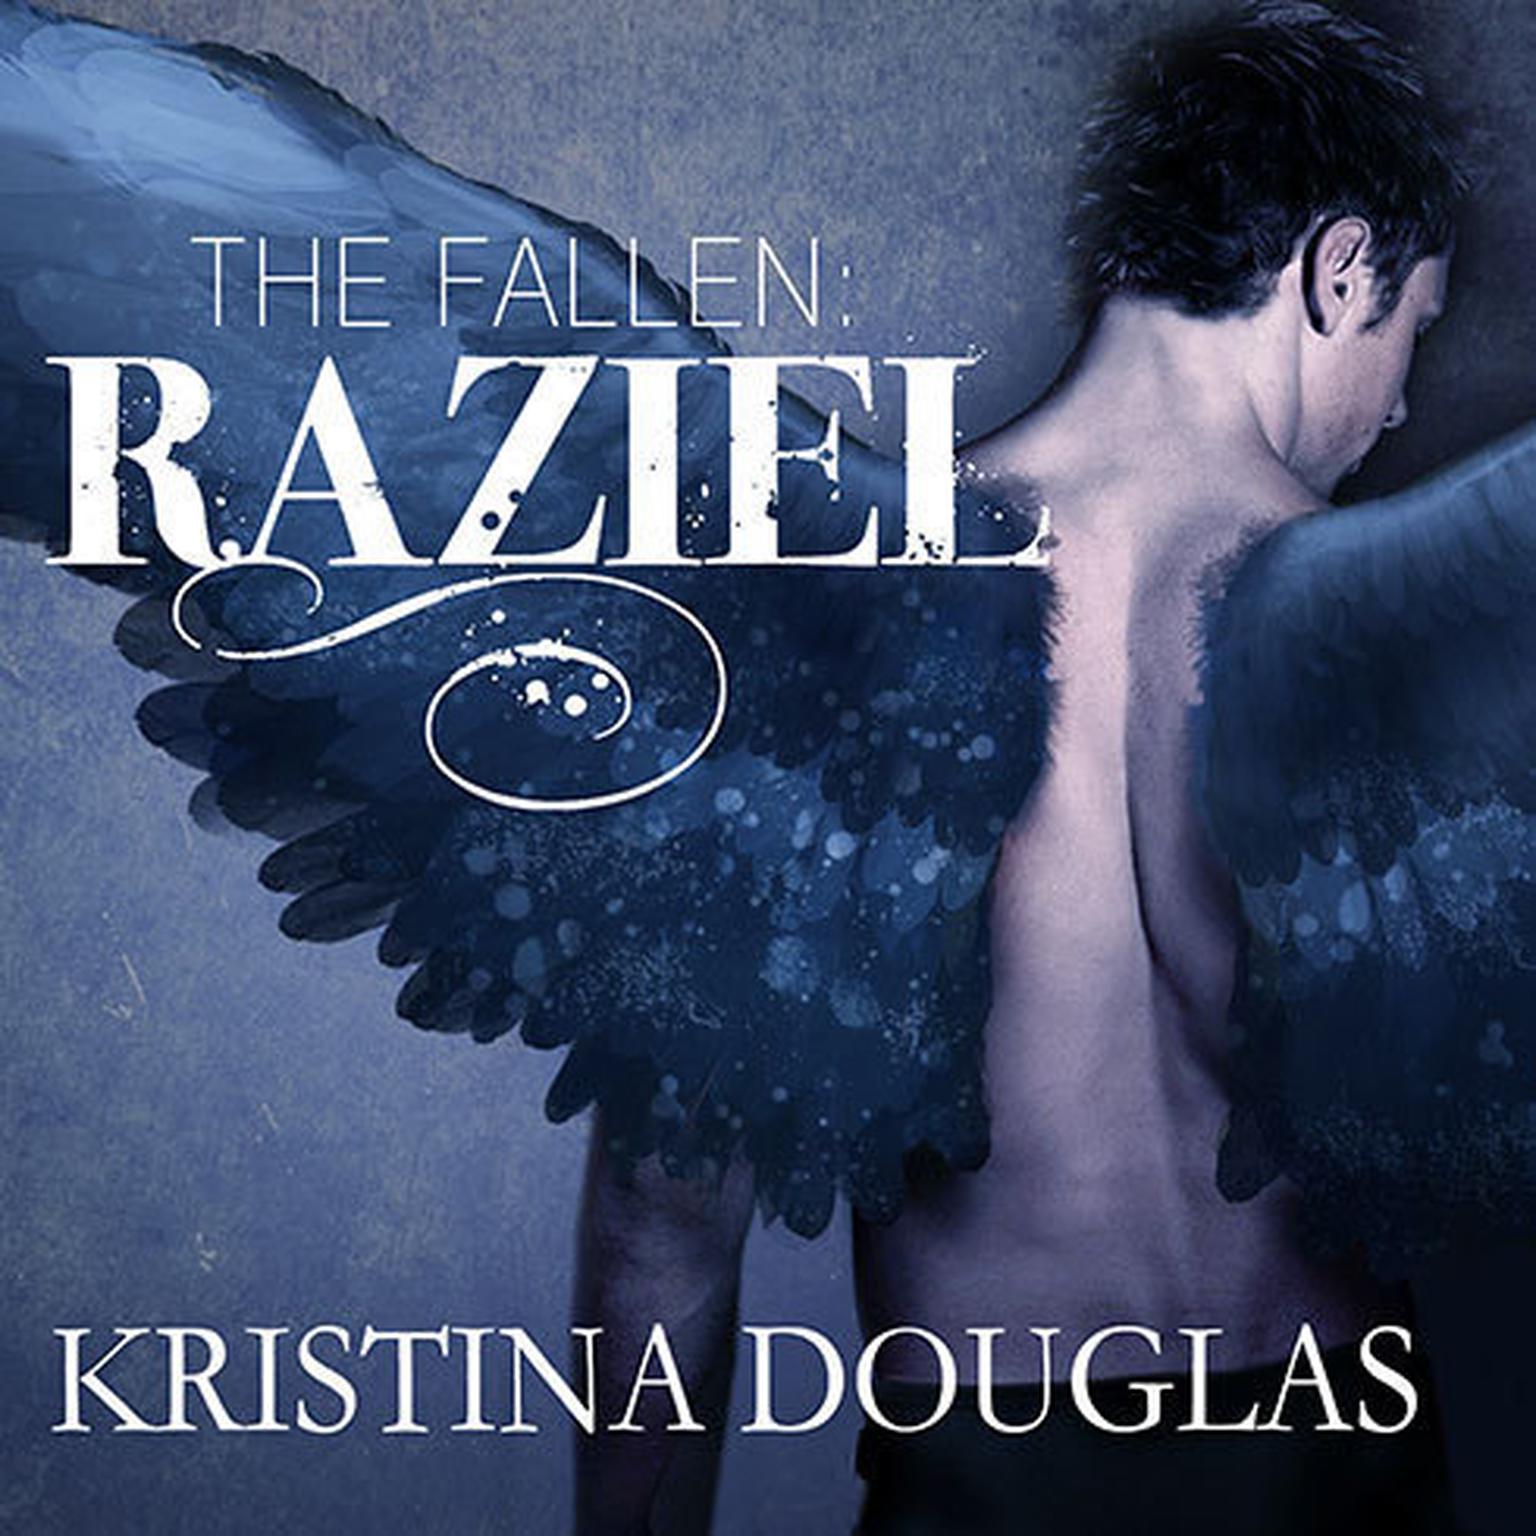 Raziel Audiobook, by Kristina Douglas